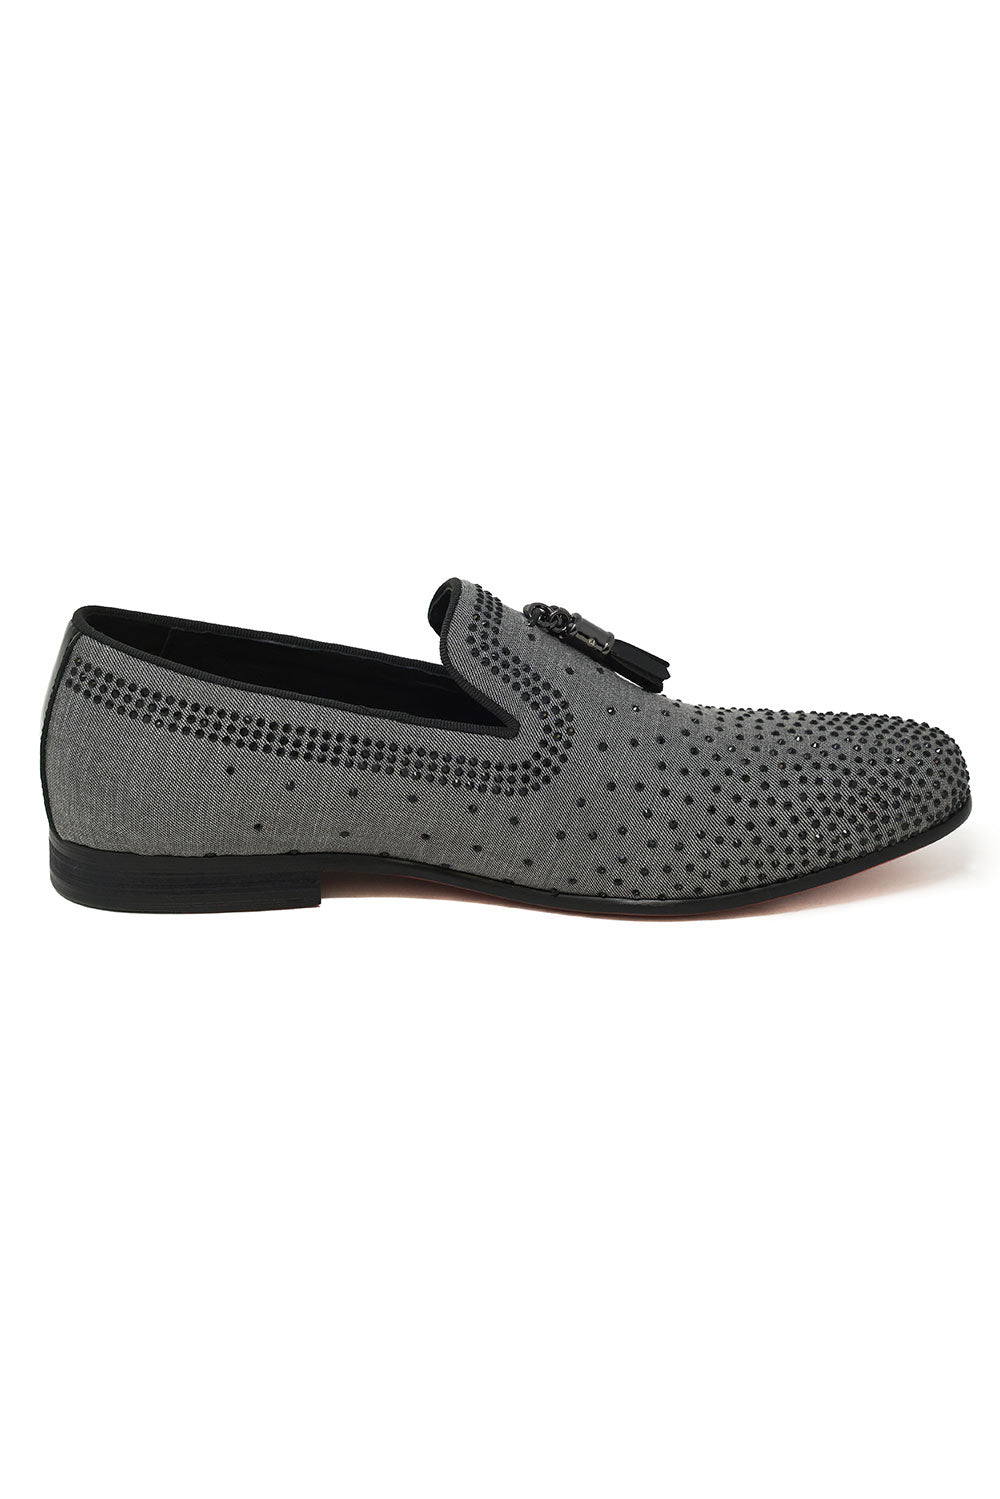 Barabas Men's Rhinestone Slip On Tassel Loafer Dress Shoes 2ESH3 Grey Black